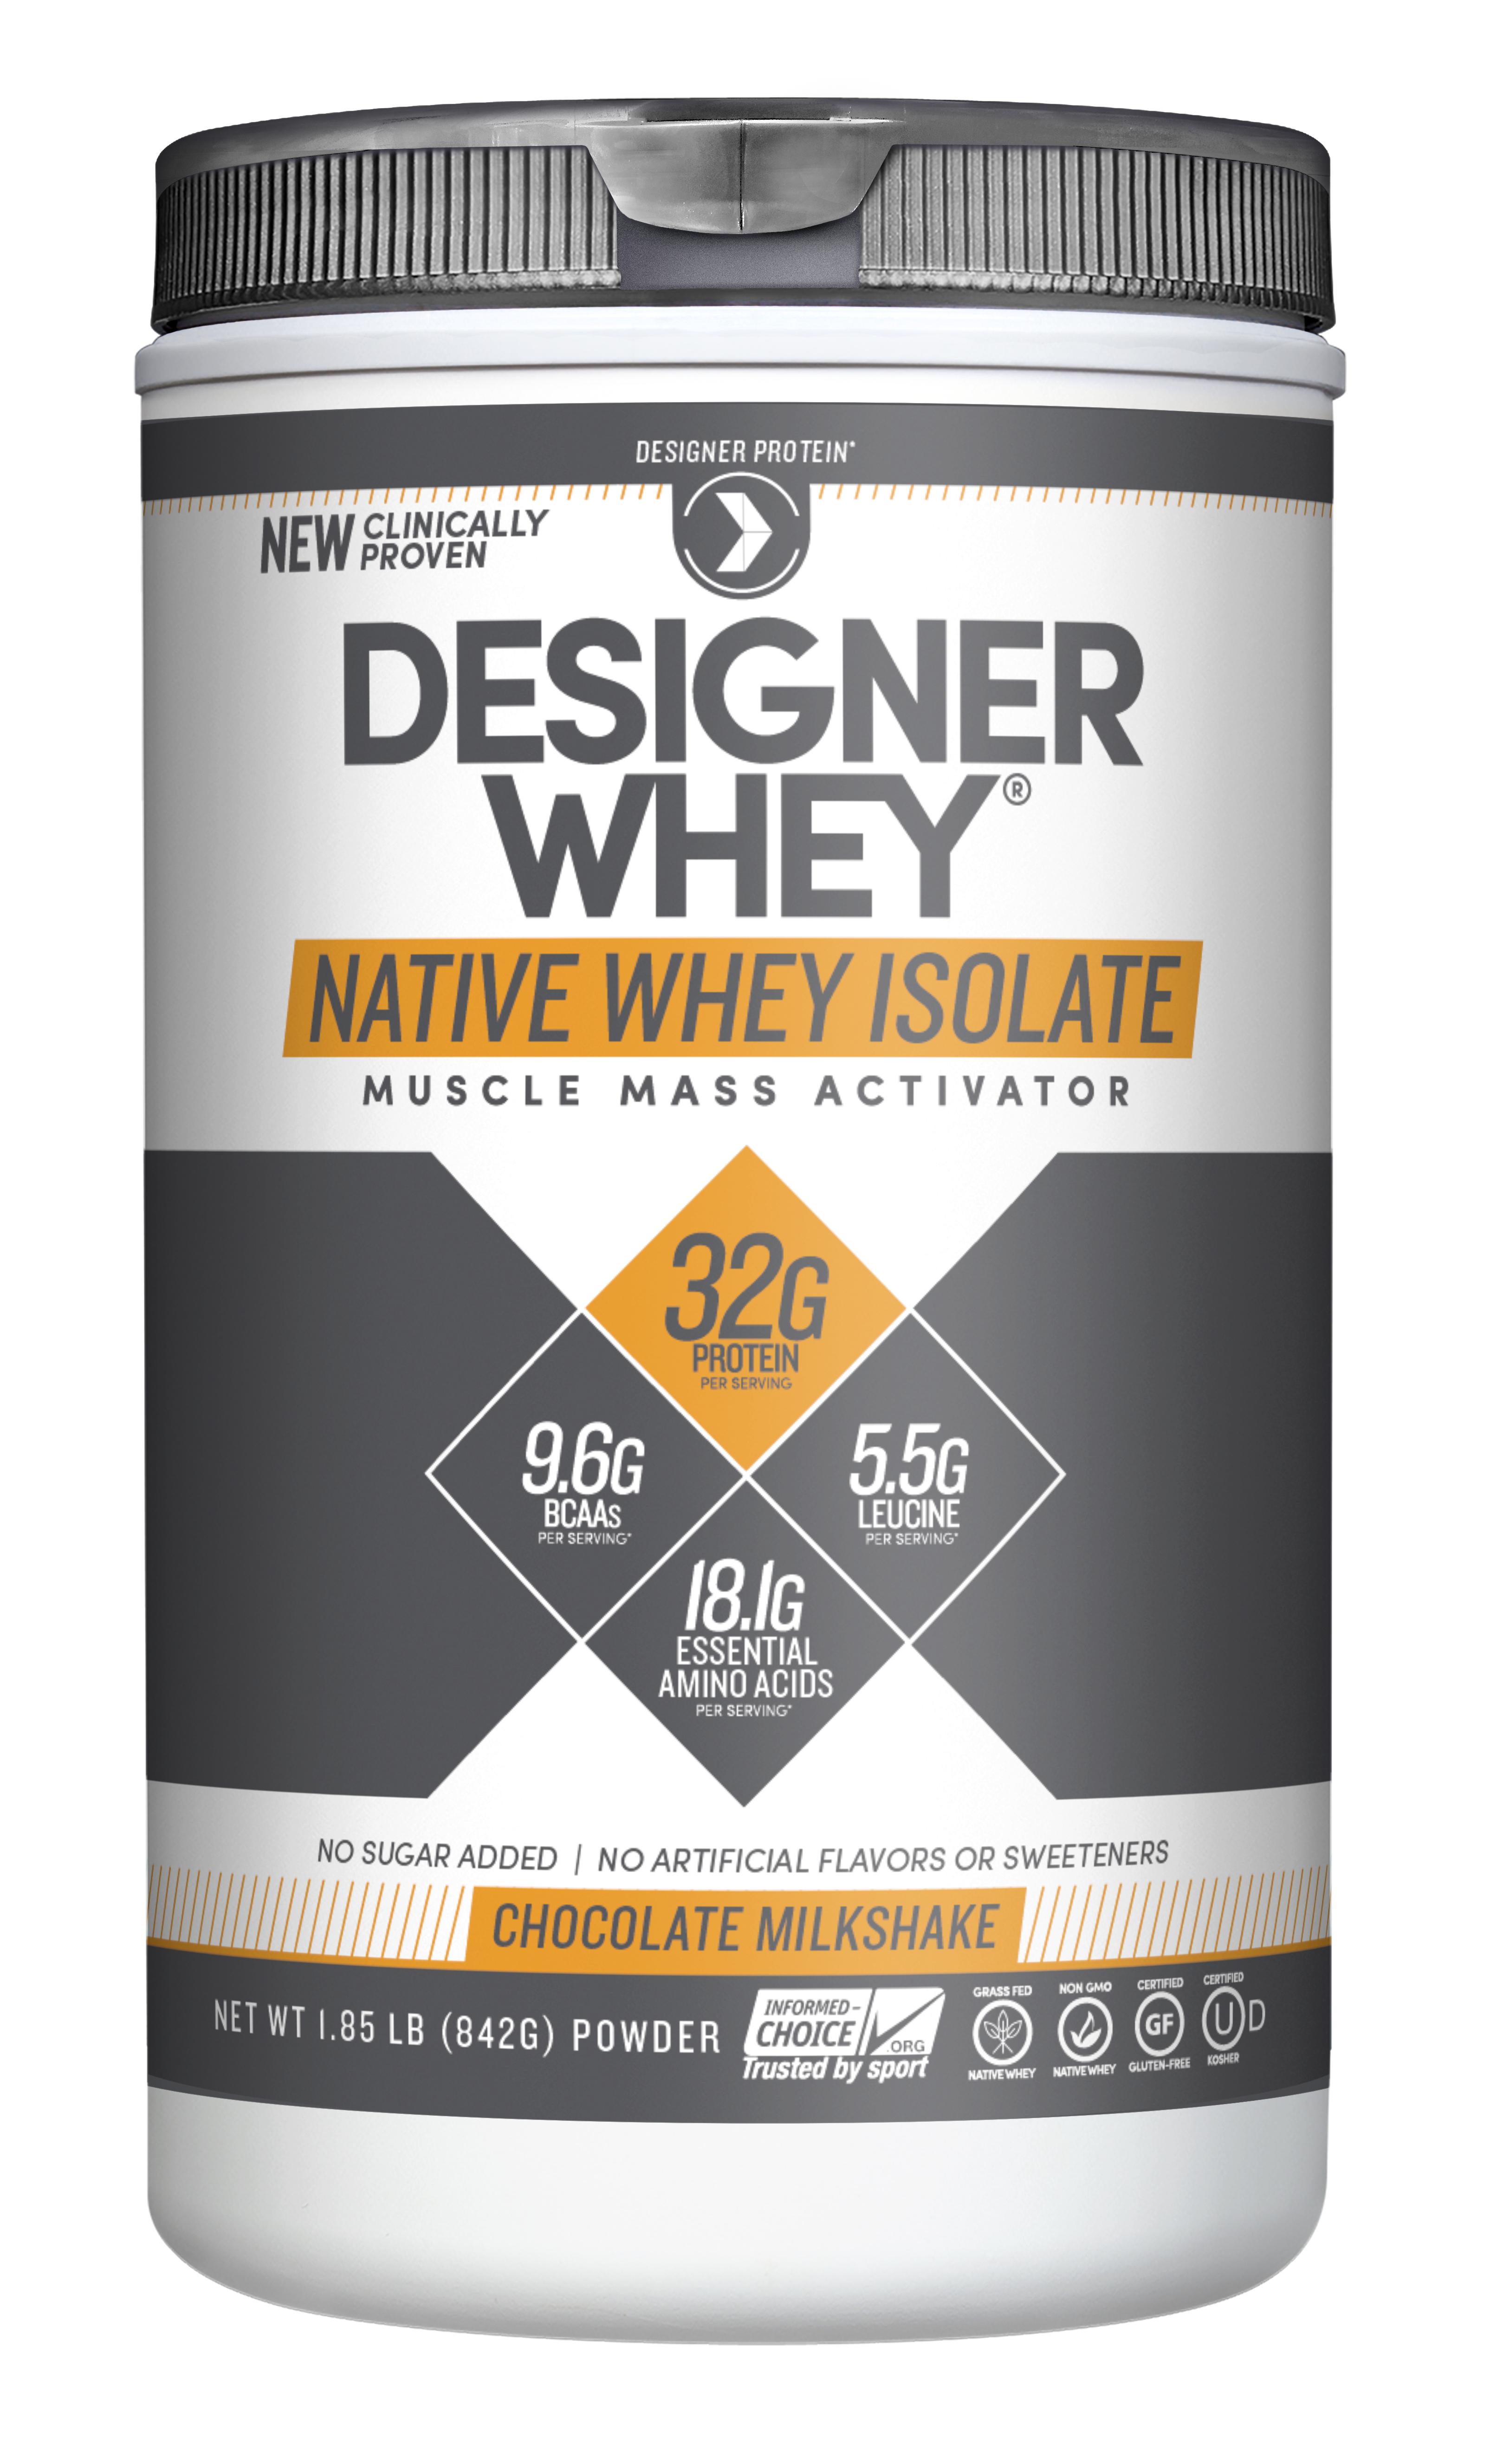 whey isolate, native whey, designer protein, protein powder and designer whey